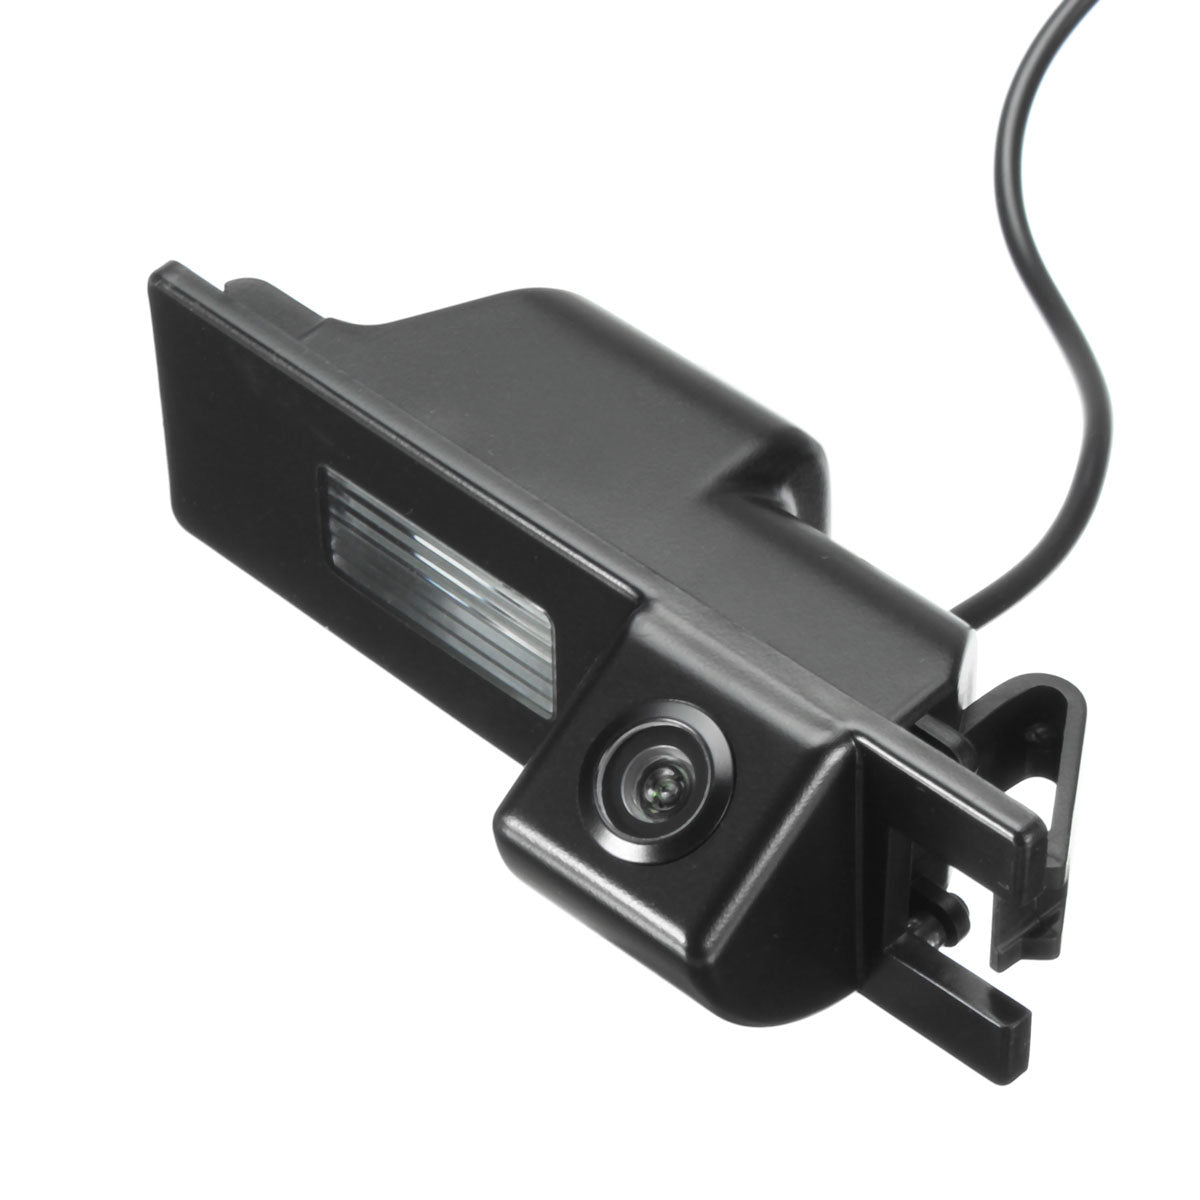 Dim Gray Car Reversing Camera Night Vision Waterproof For Vauxhall Opel Corsa Meriva Zafira Vectra Vectra